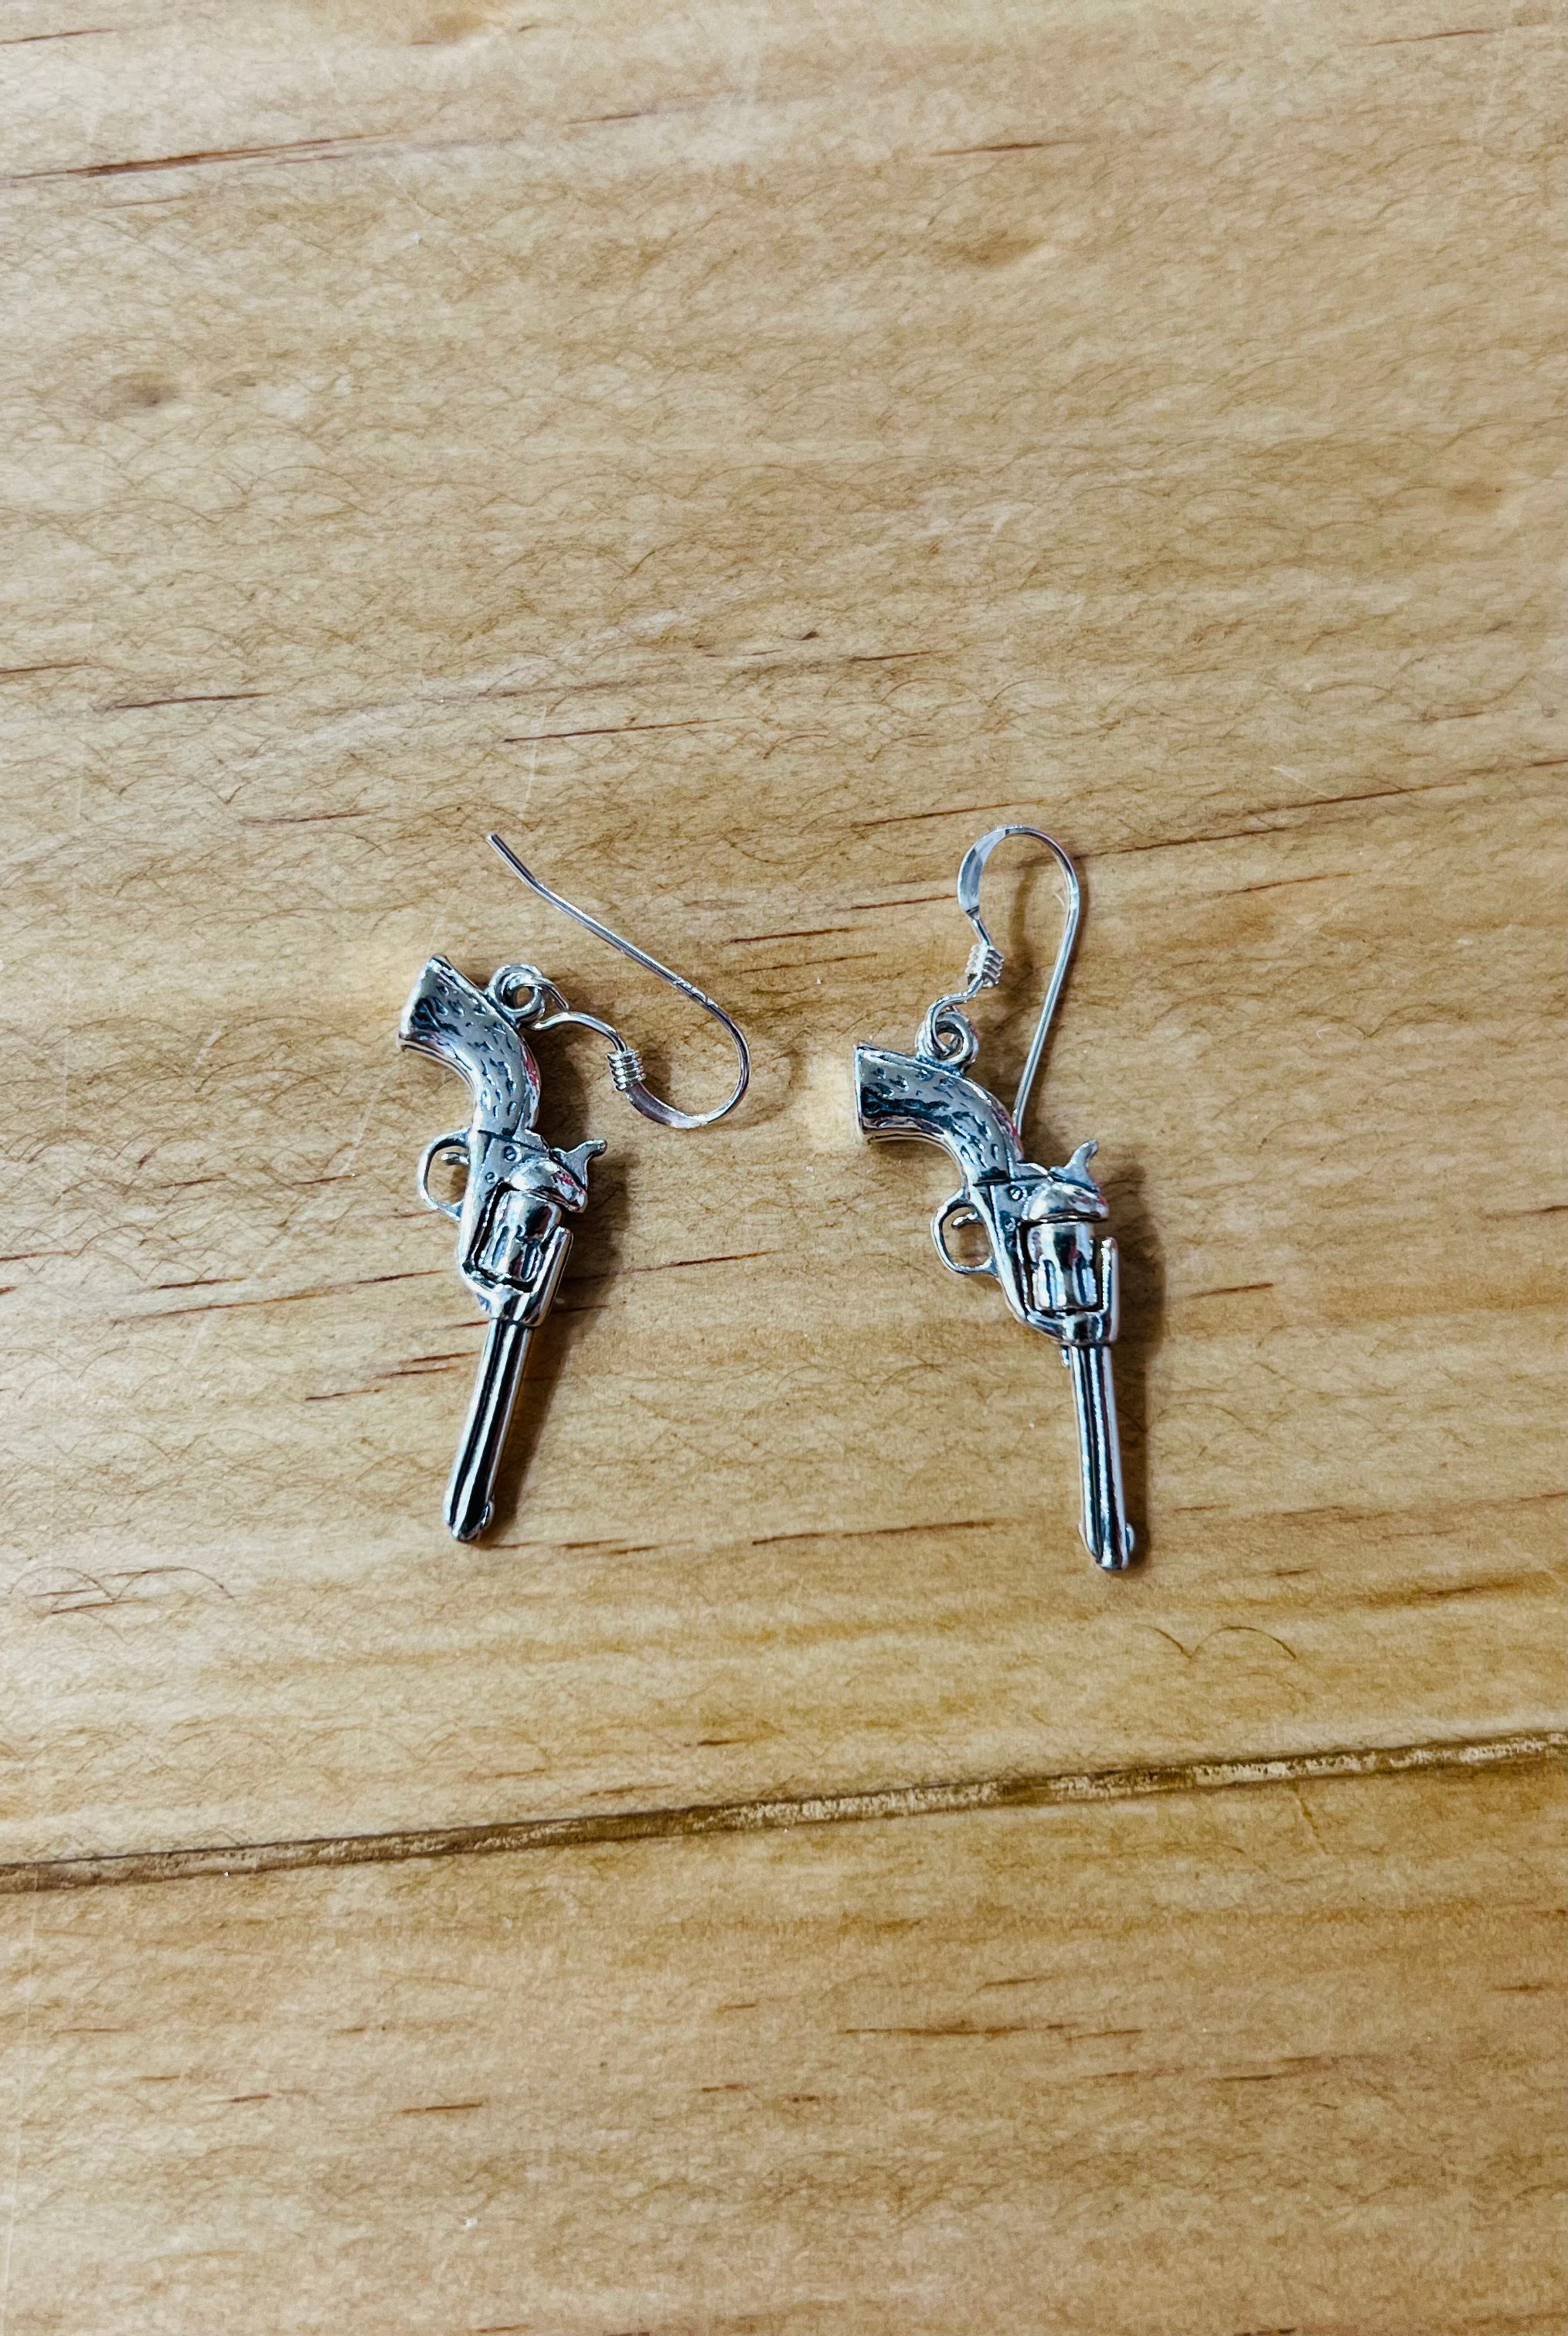 The Piper earrings